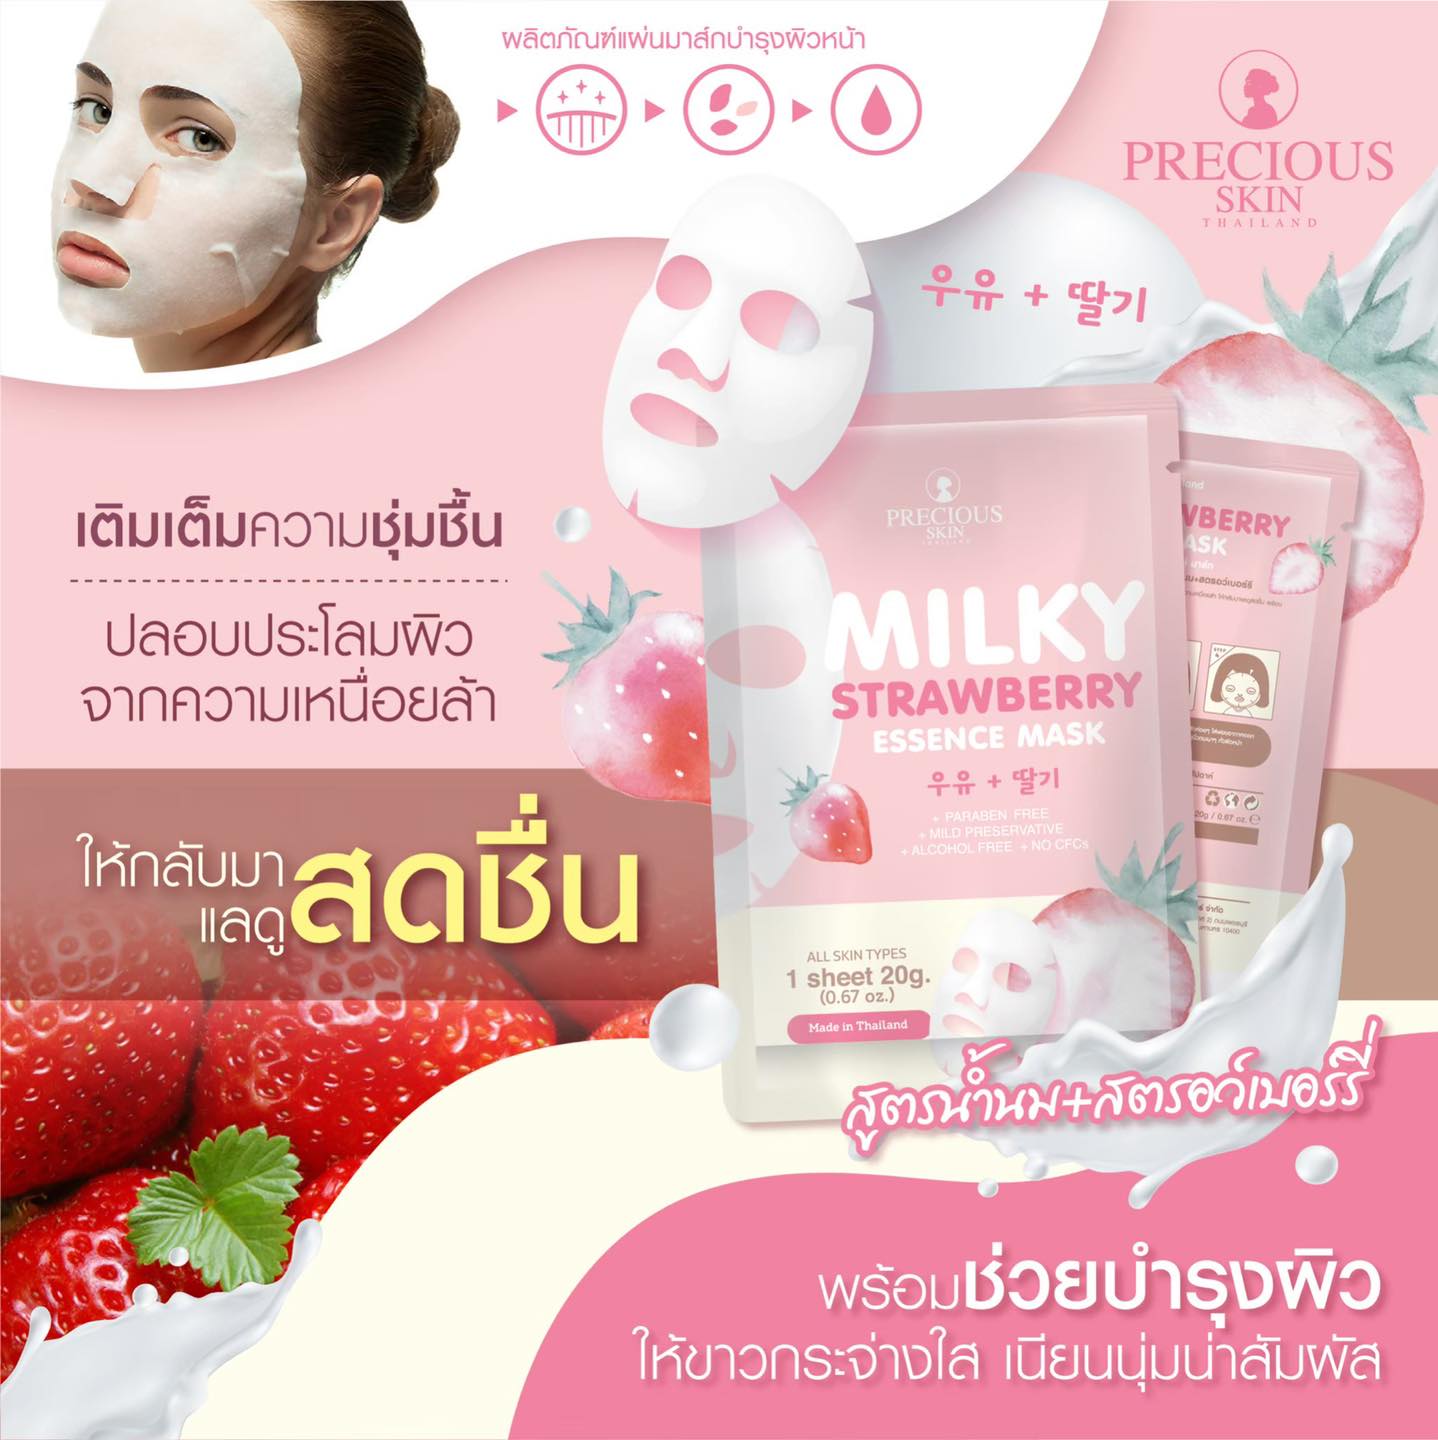 precious Skin Thailand Milky Strawberry Essence Mask,Precious Skin Thailand,Milky Strawberry Essence Mask,มาสก์Milky Strawberry Essence Mask,วิธีใช้มาสก์Milky Strawberry Essence Mask,ราคามาสก์Milky Strawberry Essence Mask,รีวิวมาสก์Milky Strawberry Essence Mask,มาสก์หน้าPrecious Skin Thailand,